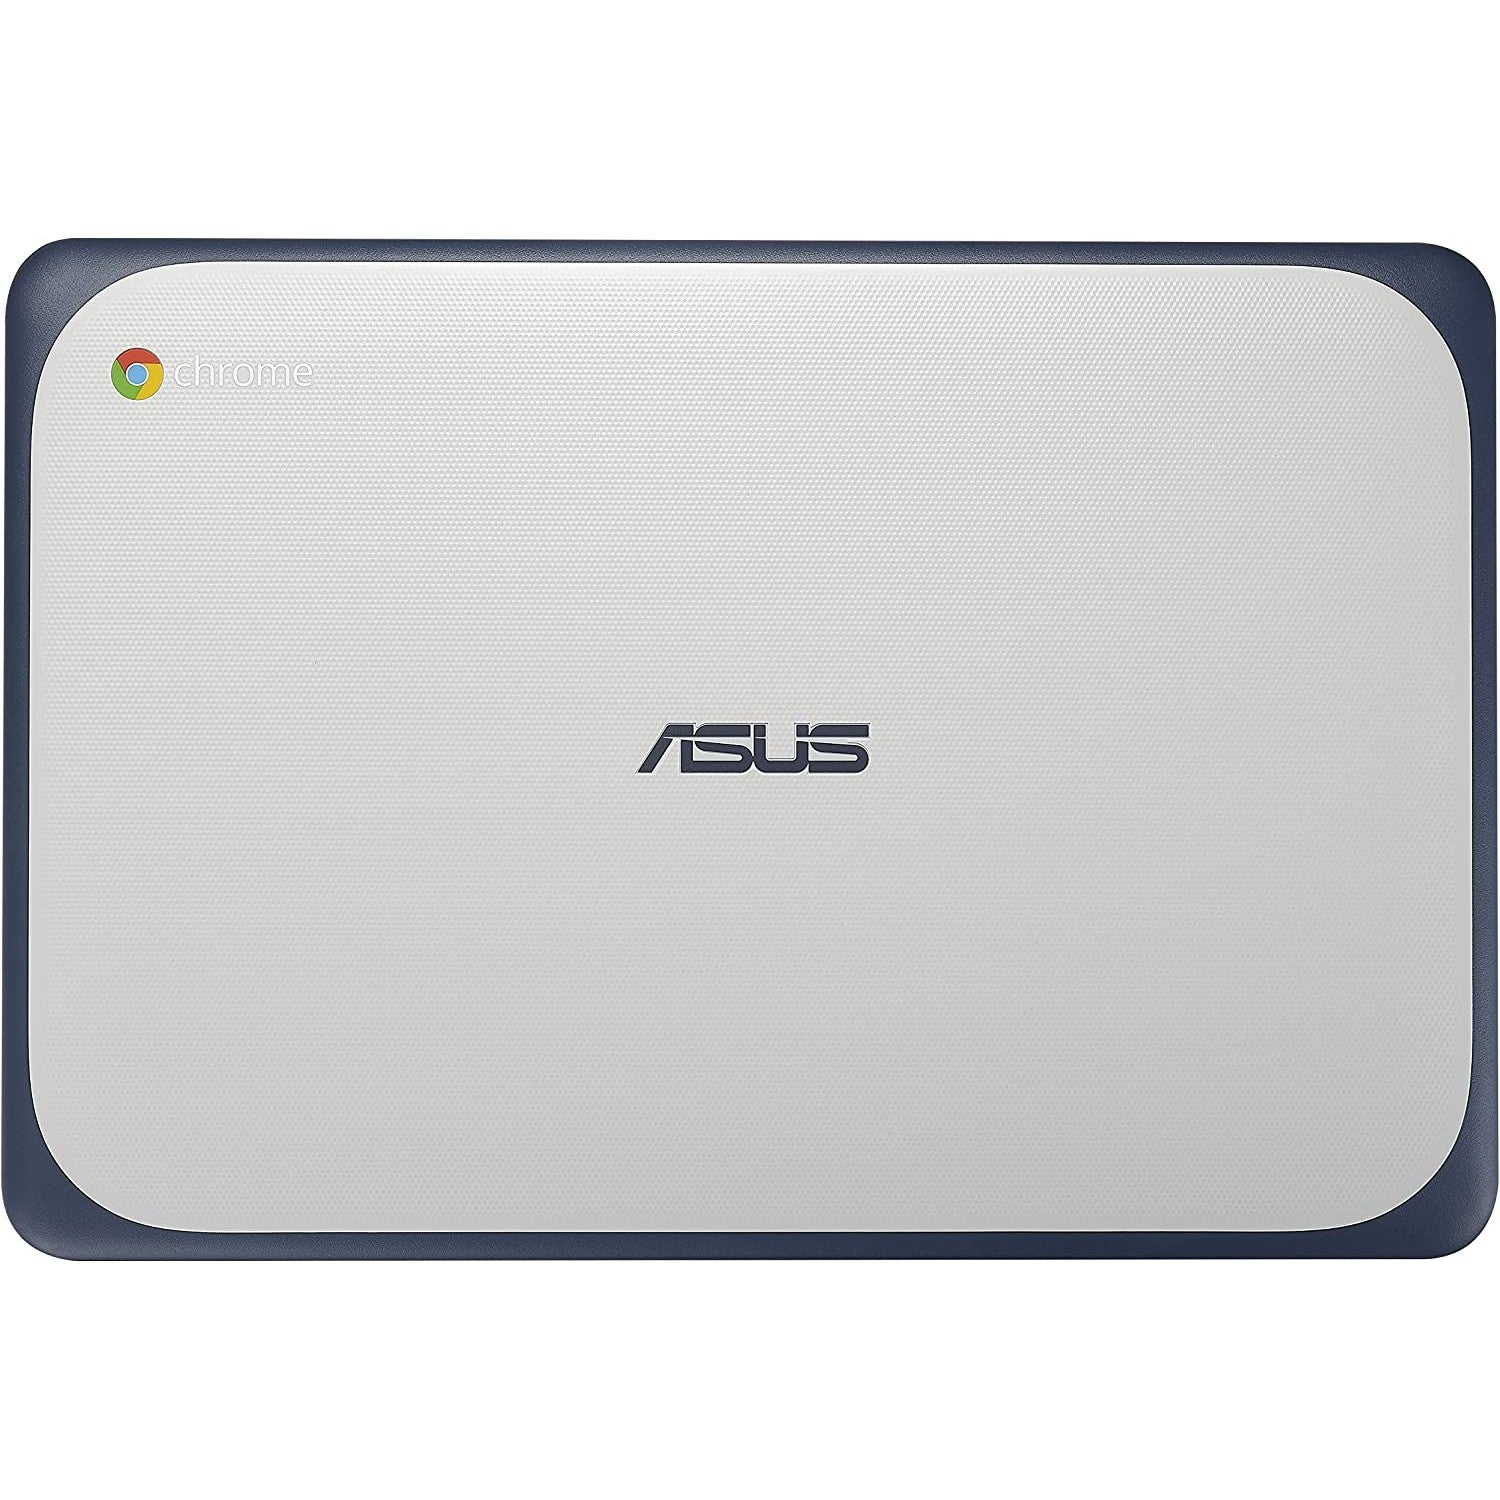 ASUS C202SA-GJ0027, Intel Celeron, 2GB RAM, 16GB eMMC - Dark Blue - Refurbished Pristine